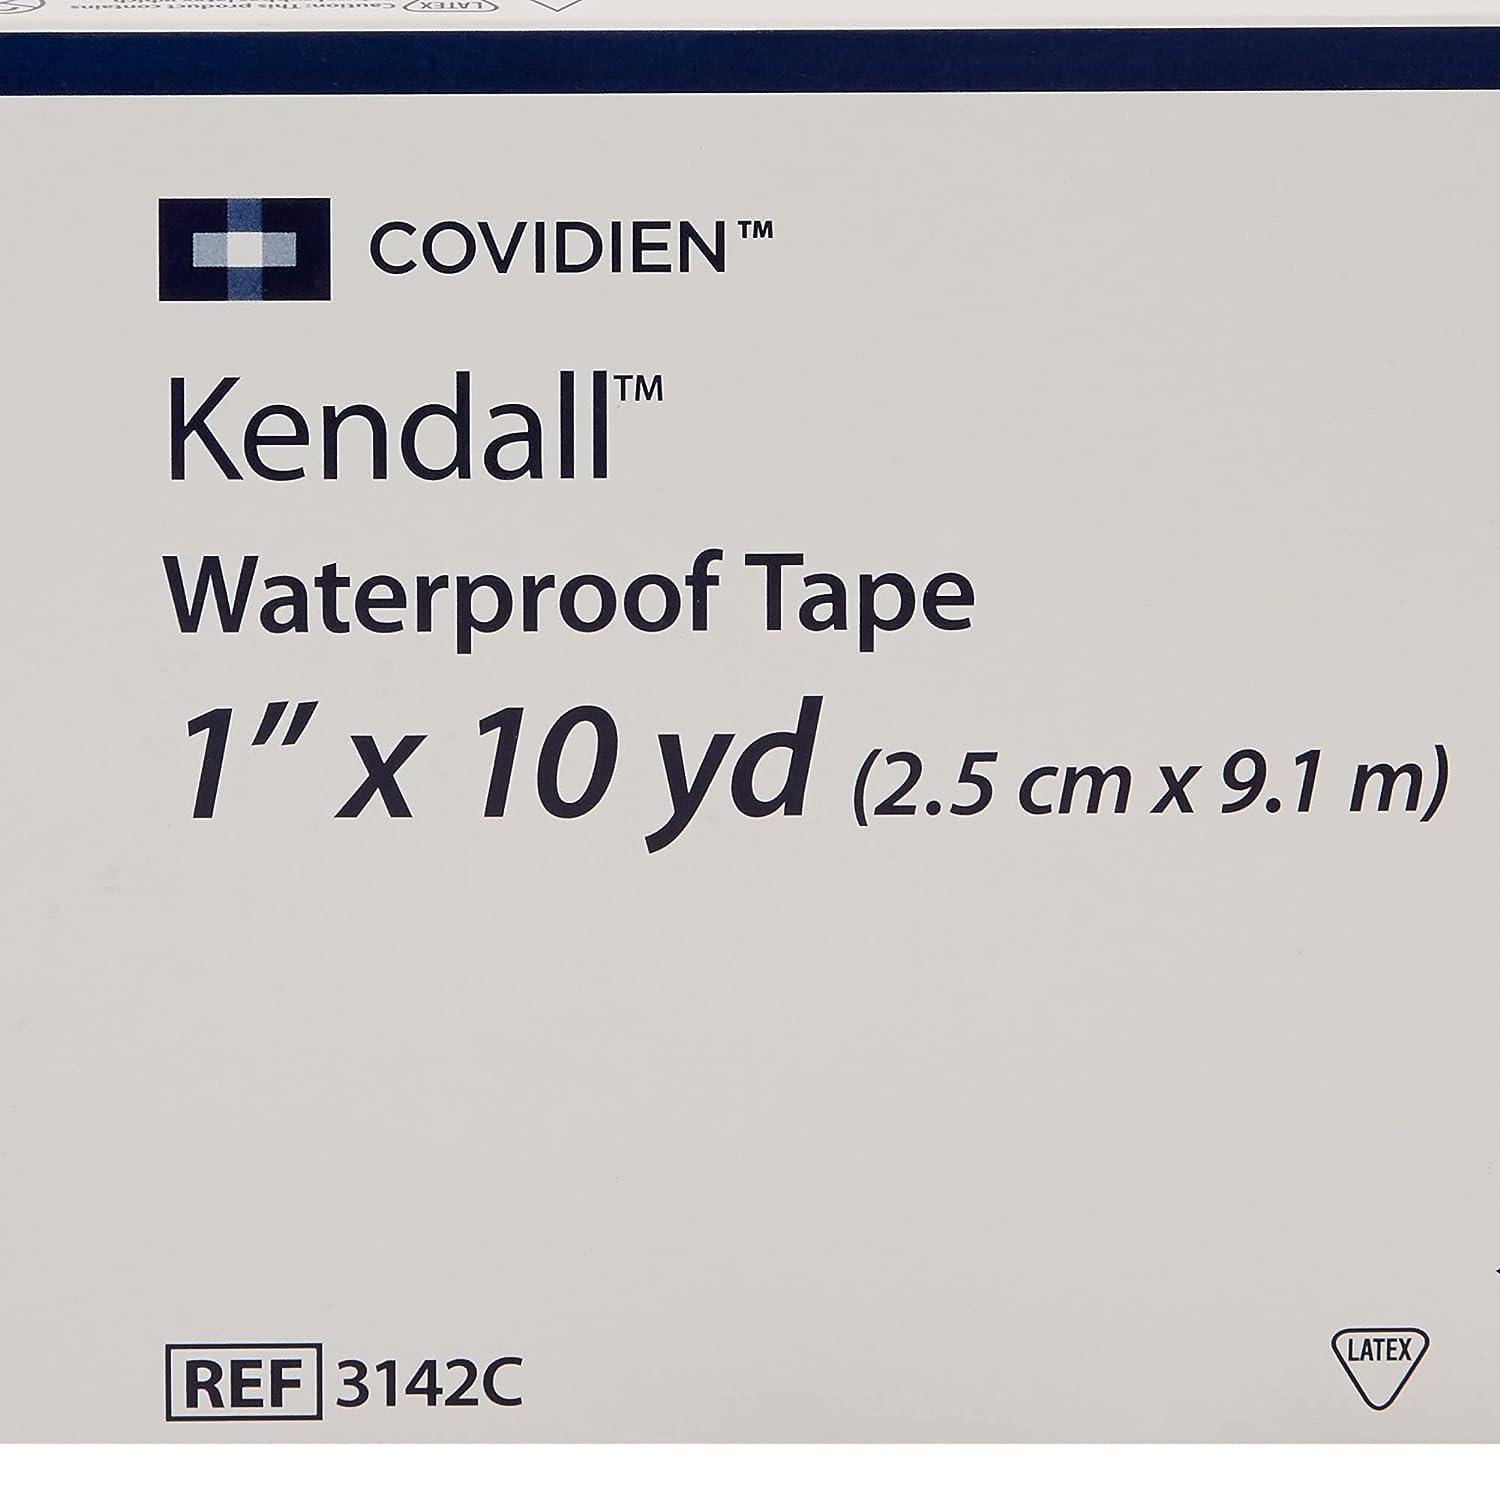 Buy Kendall Waterproof Tape at Medical Monks!